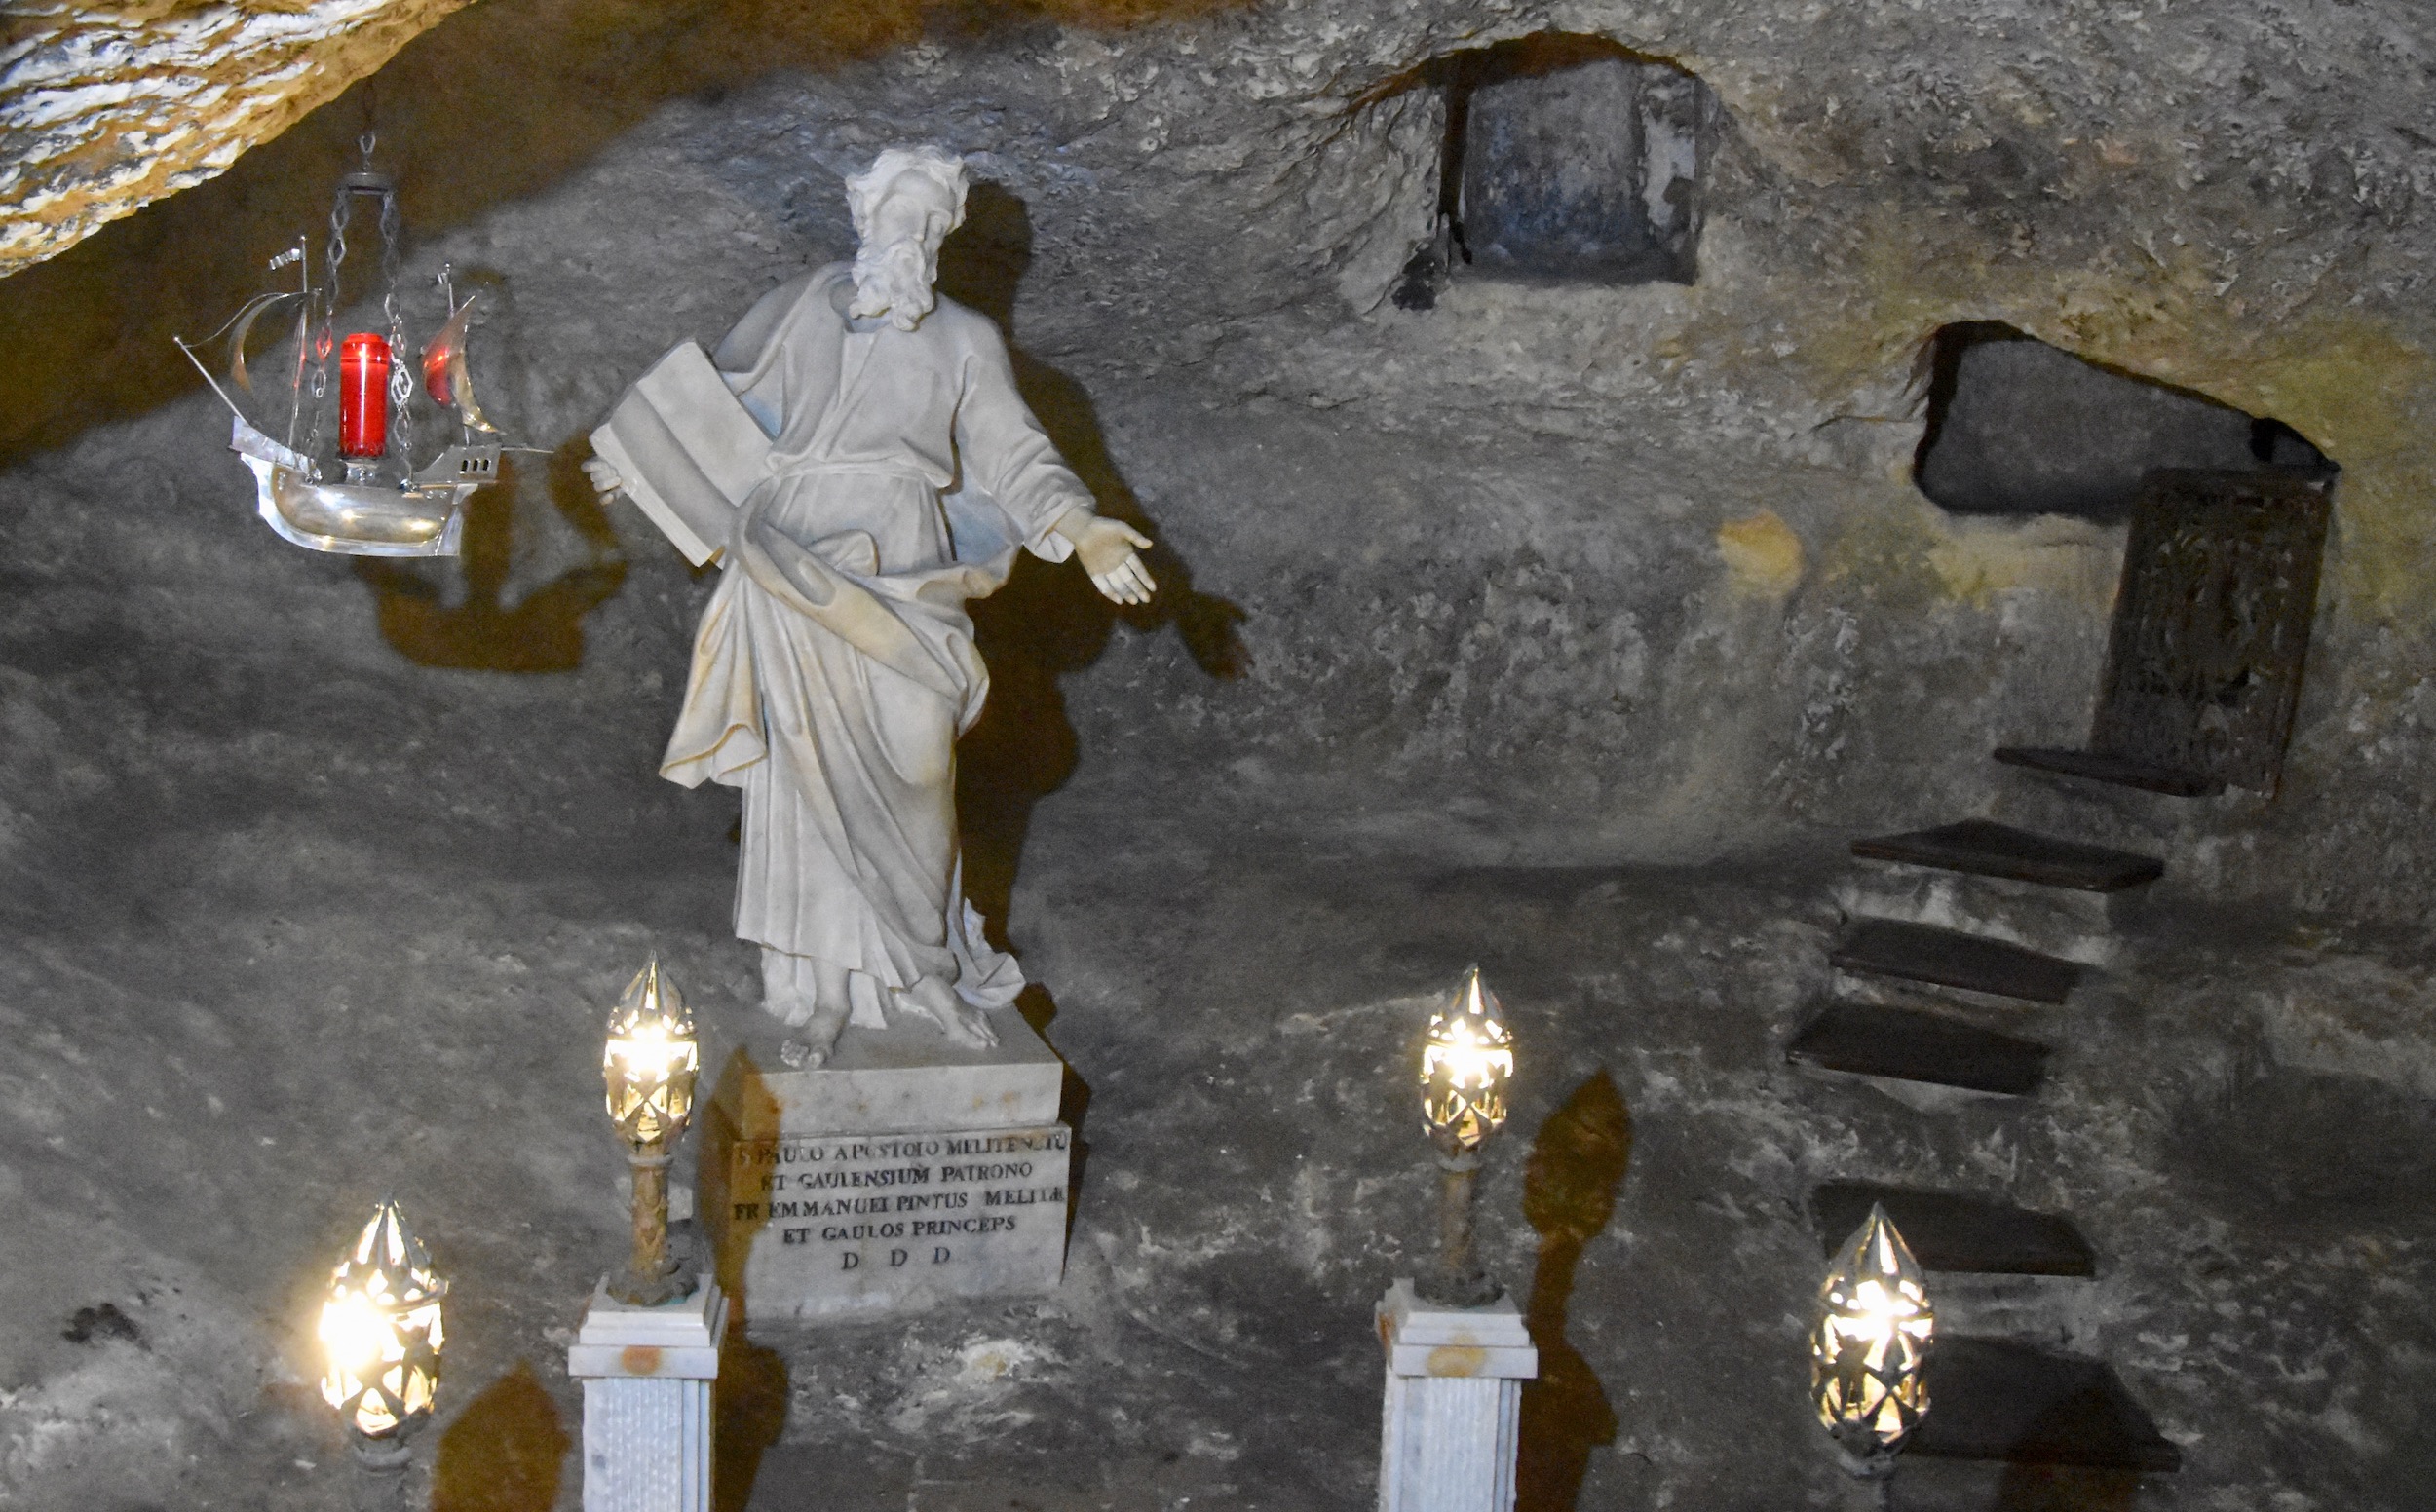 St. Pail in Malta - The Grotto